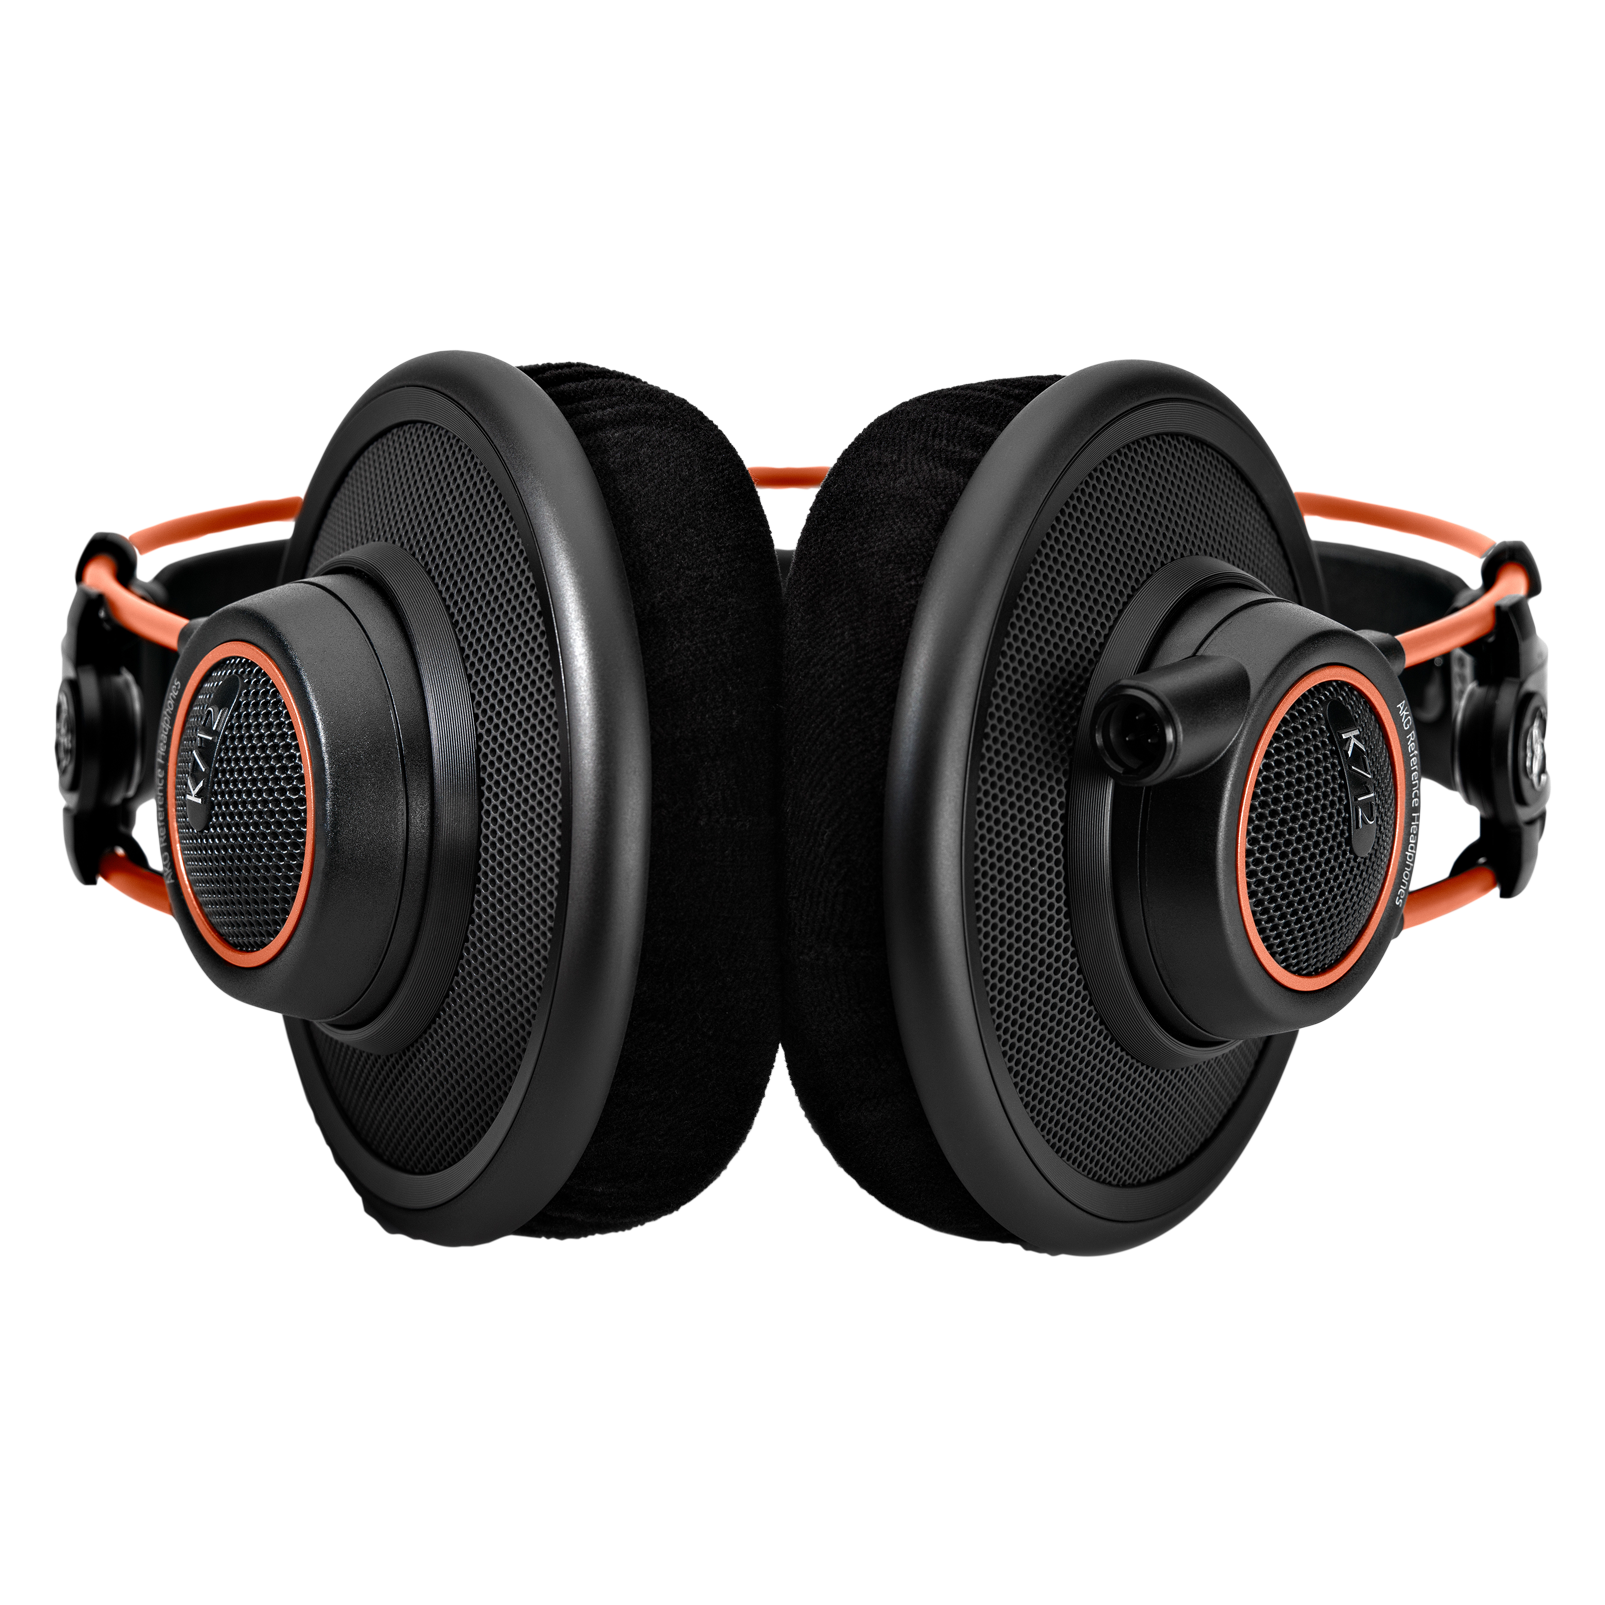 K712 PRO - Black - Reference studio headphones  - Detailshot 1